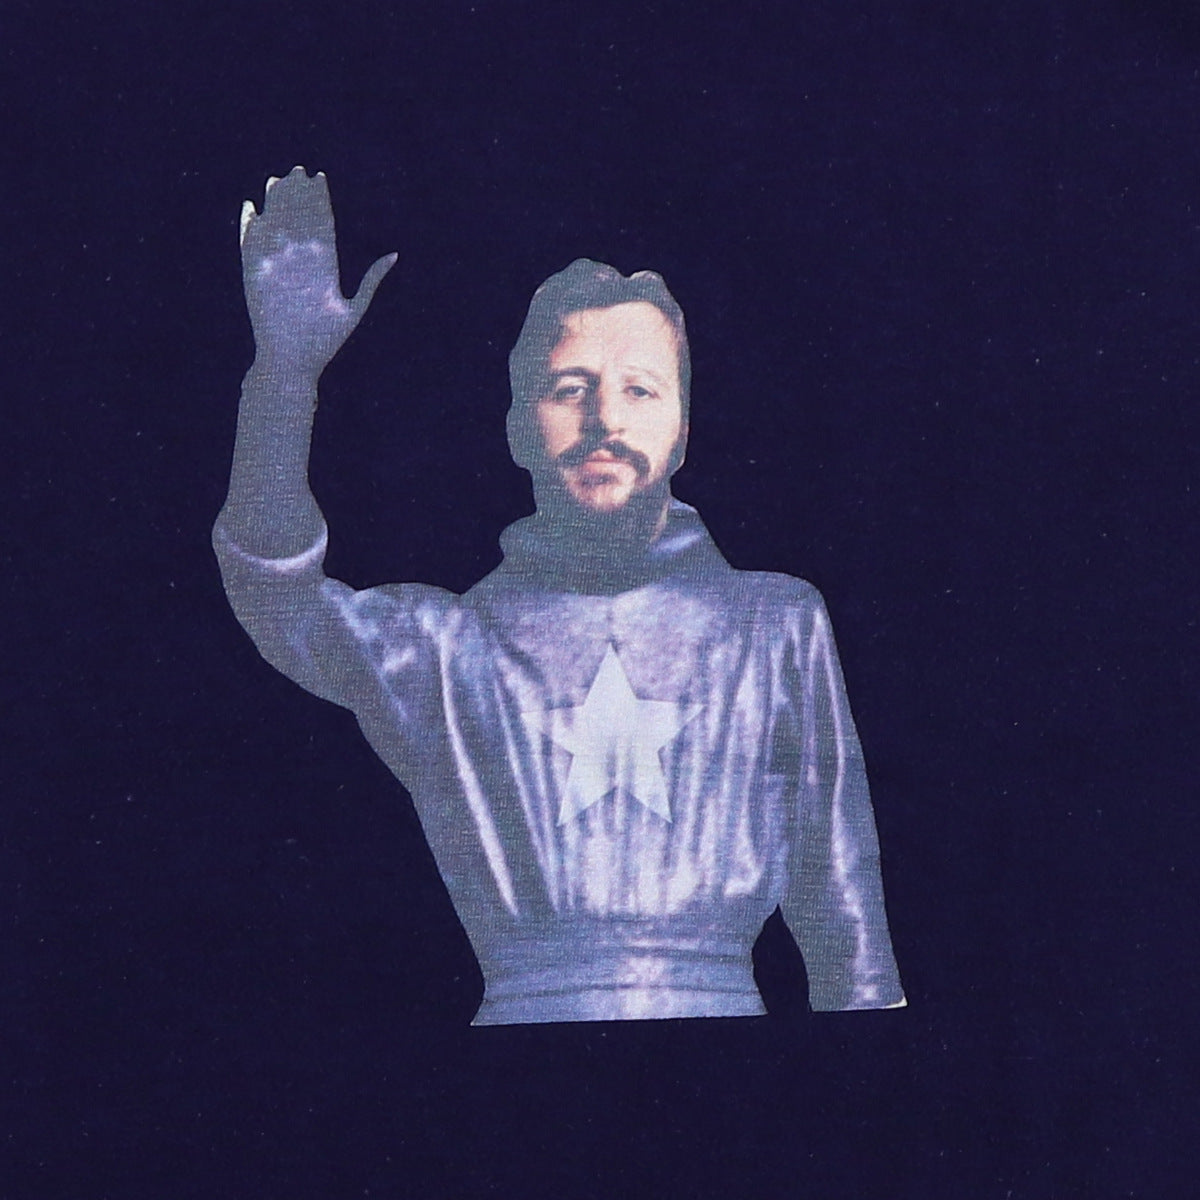 1974 Ringo Starr Goodnight Vienna Promo Shirt